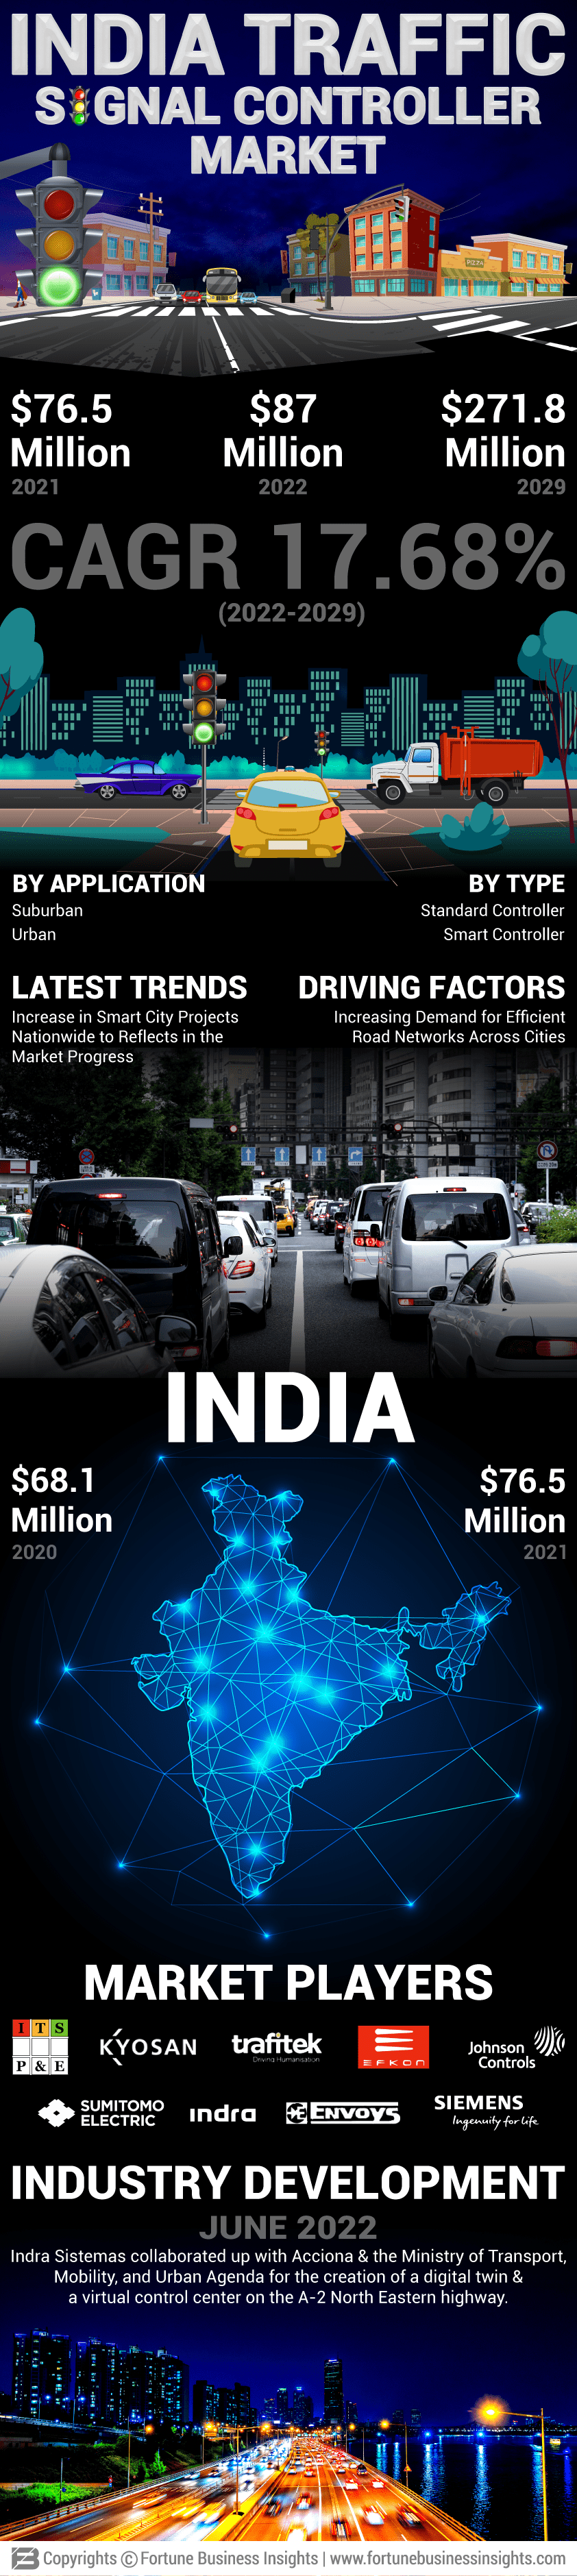 India Traffic Signal Controller Market